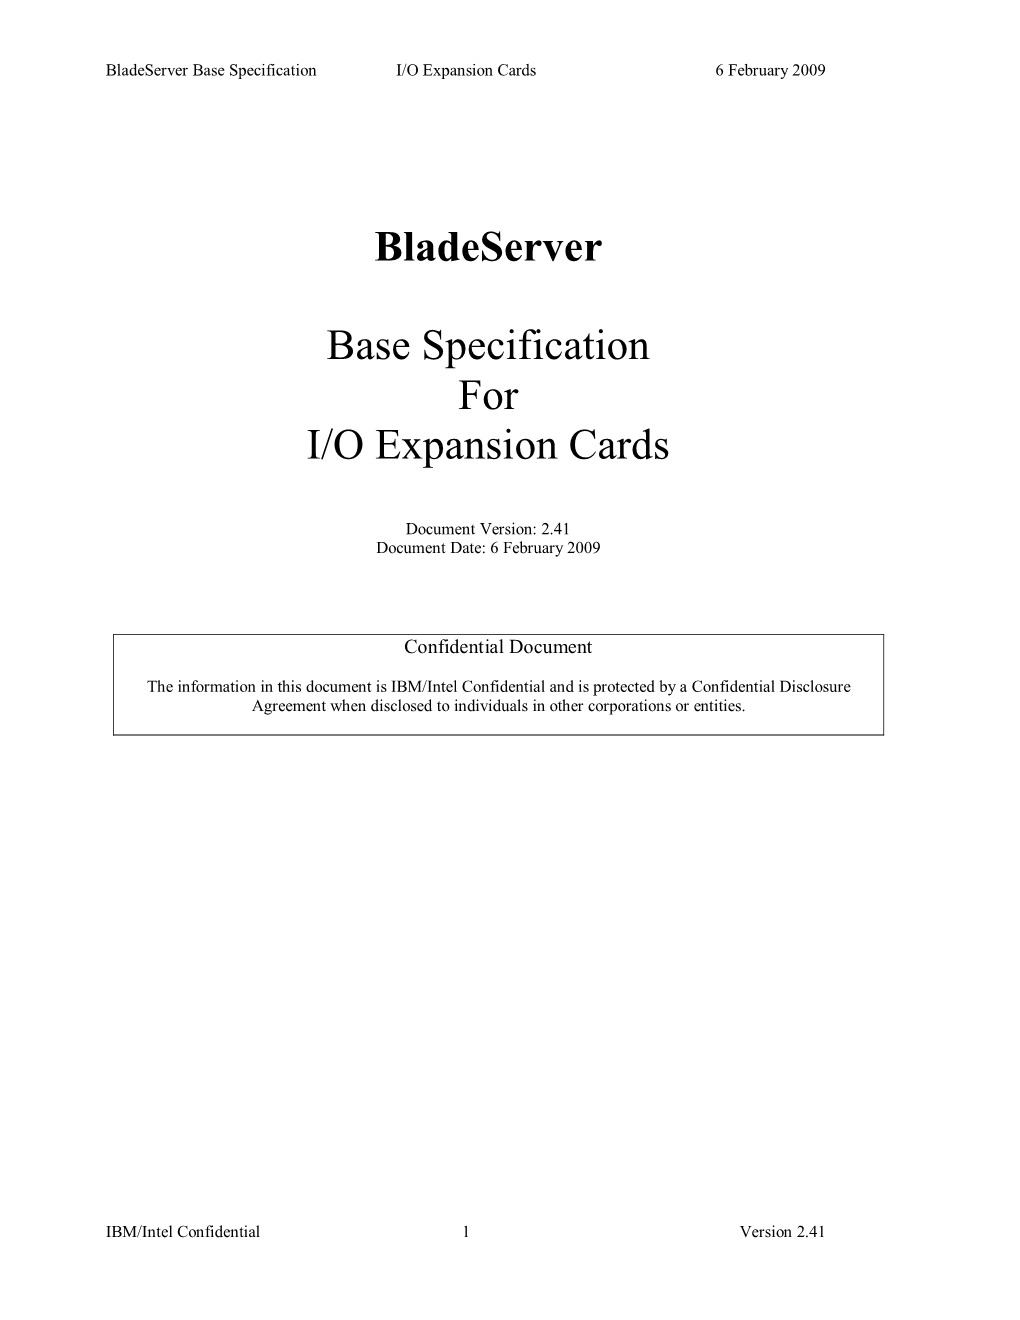 Bladeserver Base Specification for I/O Expansion Cards